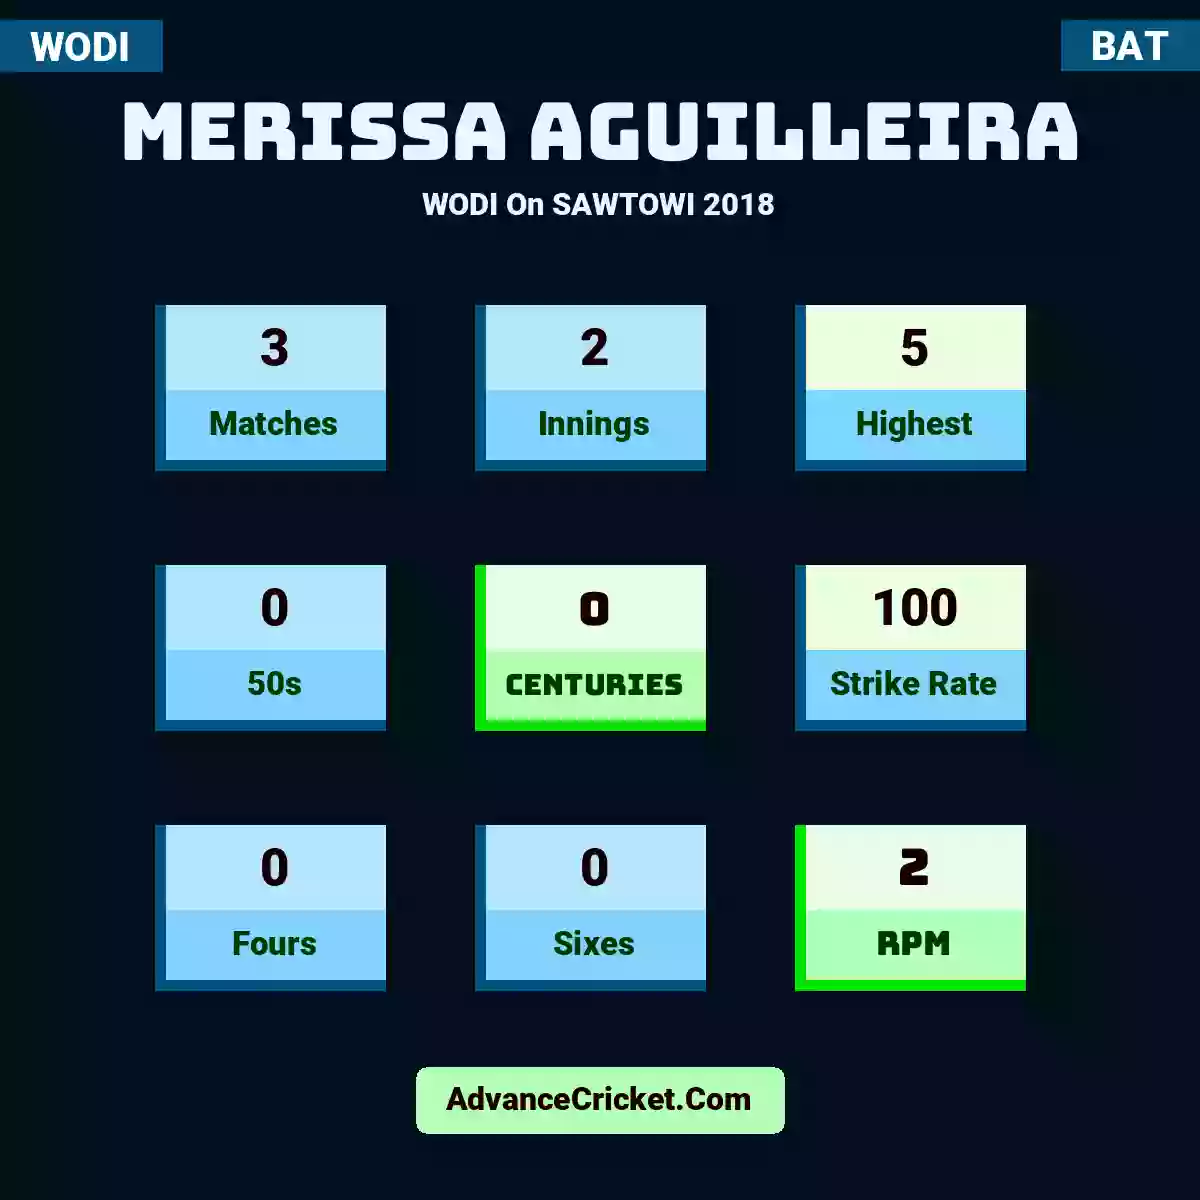 Merissa Aguilleira WODI  On SAWTOWI 2018, Merissa Aguilleira played 3 matches, scored 5 runs as highest, 0 half-centuries, and 0 centuries, with a strike rate of 100. M.Aguilleira hit 0 fours and 0 sixes, with an RPM of 2.